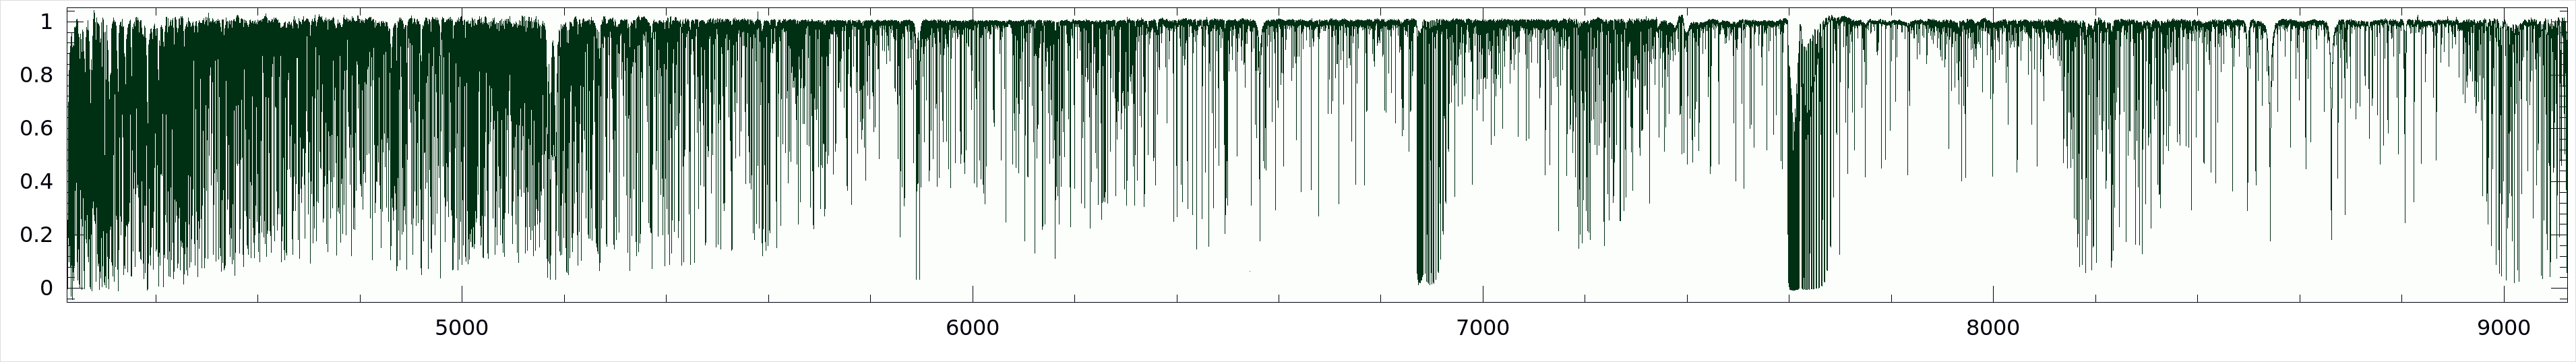 Spectrum of the star Kepler 555 hosting at least 5 planets